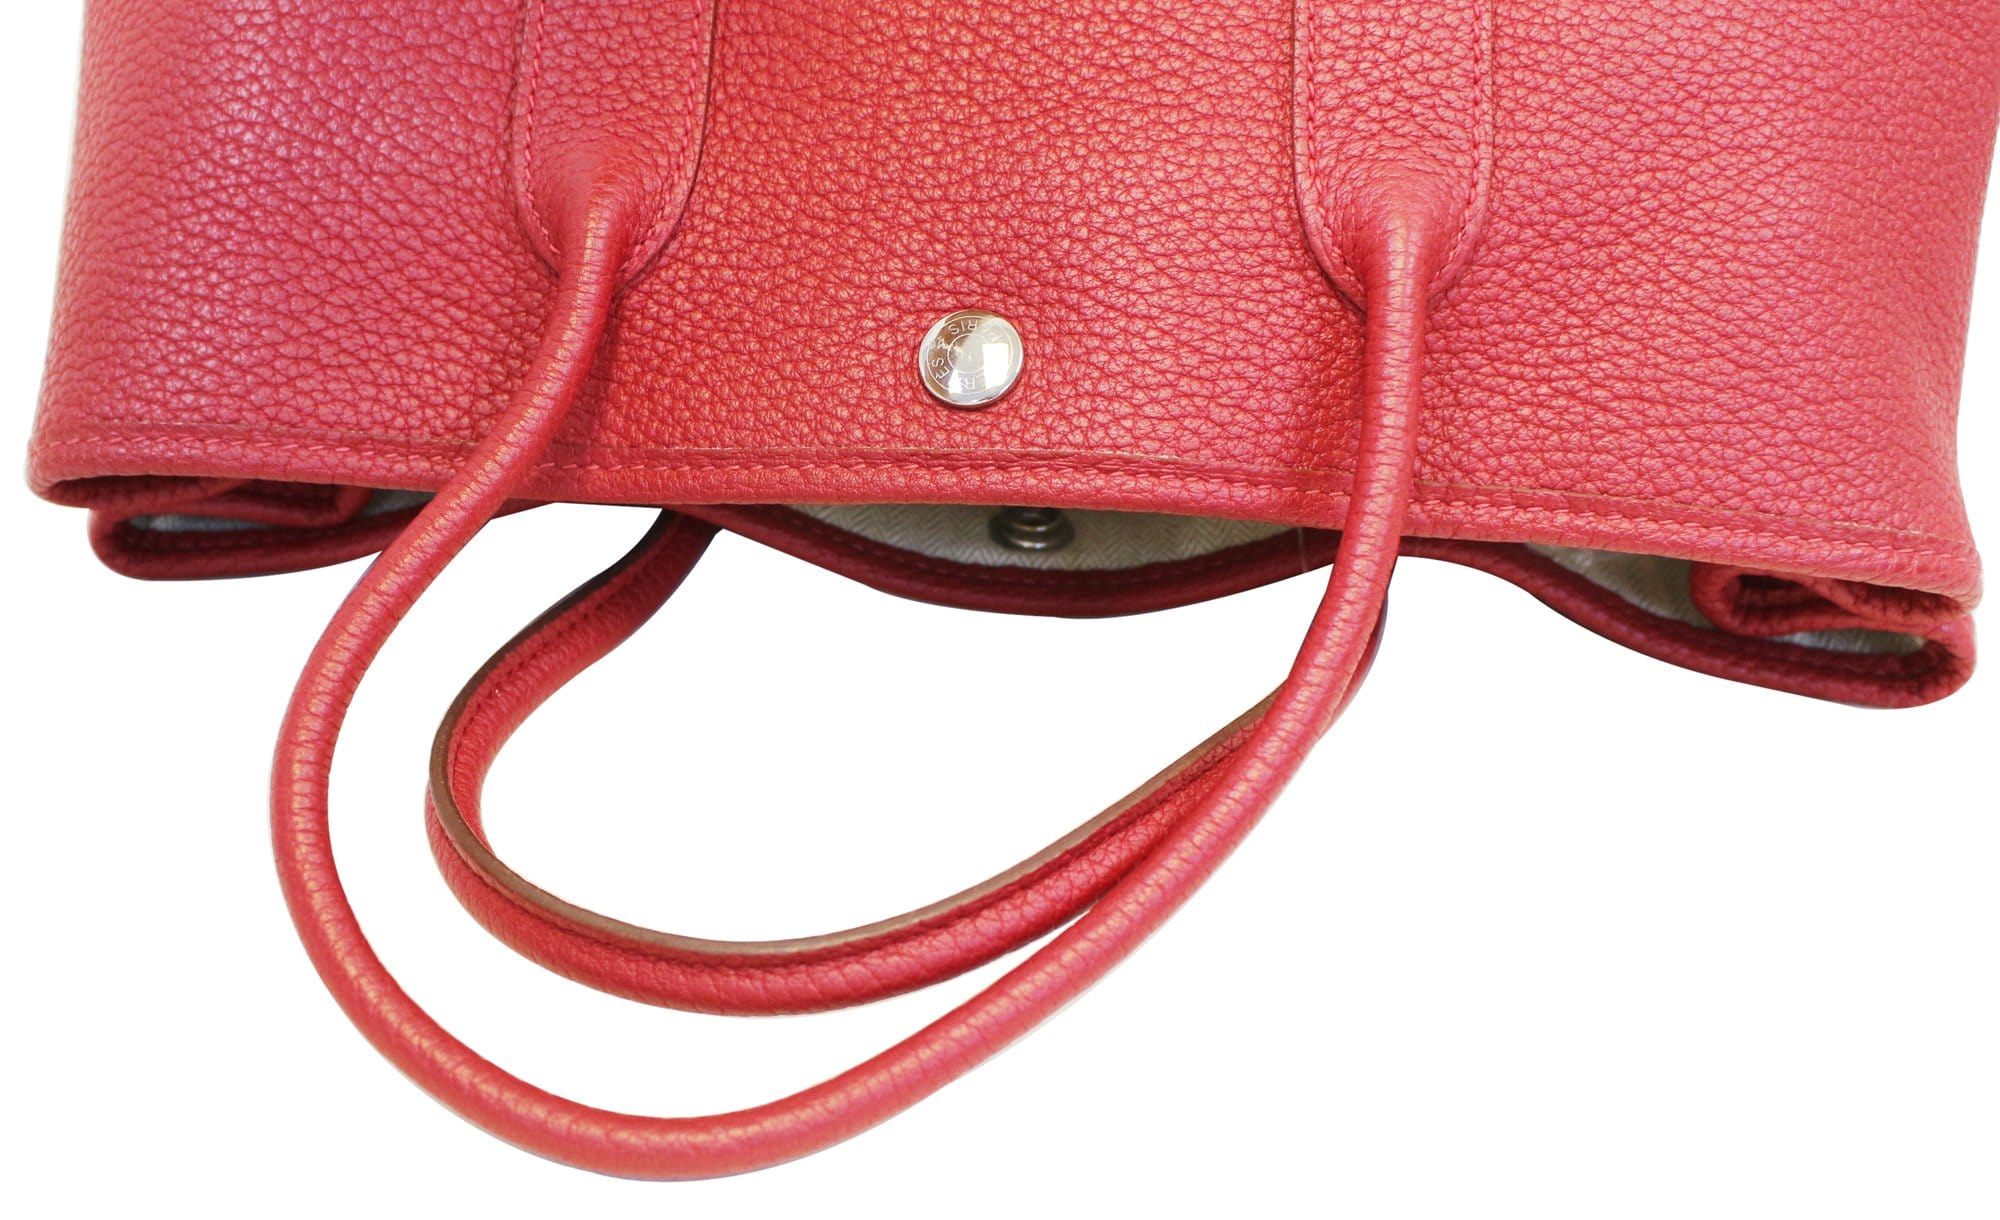 100% Genuine Leather Bag Garden Party Tote Bag Handbag Women